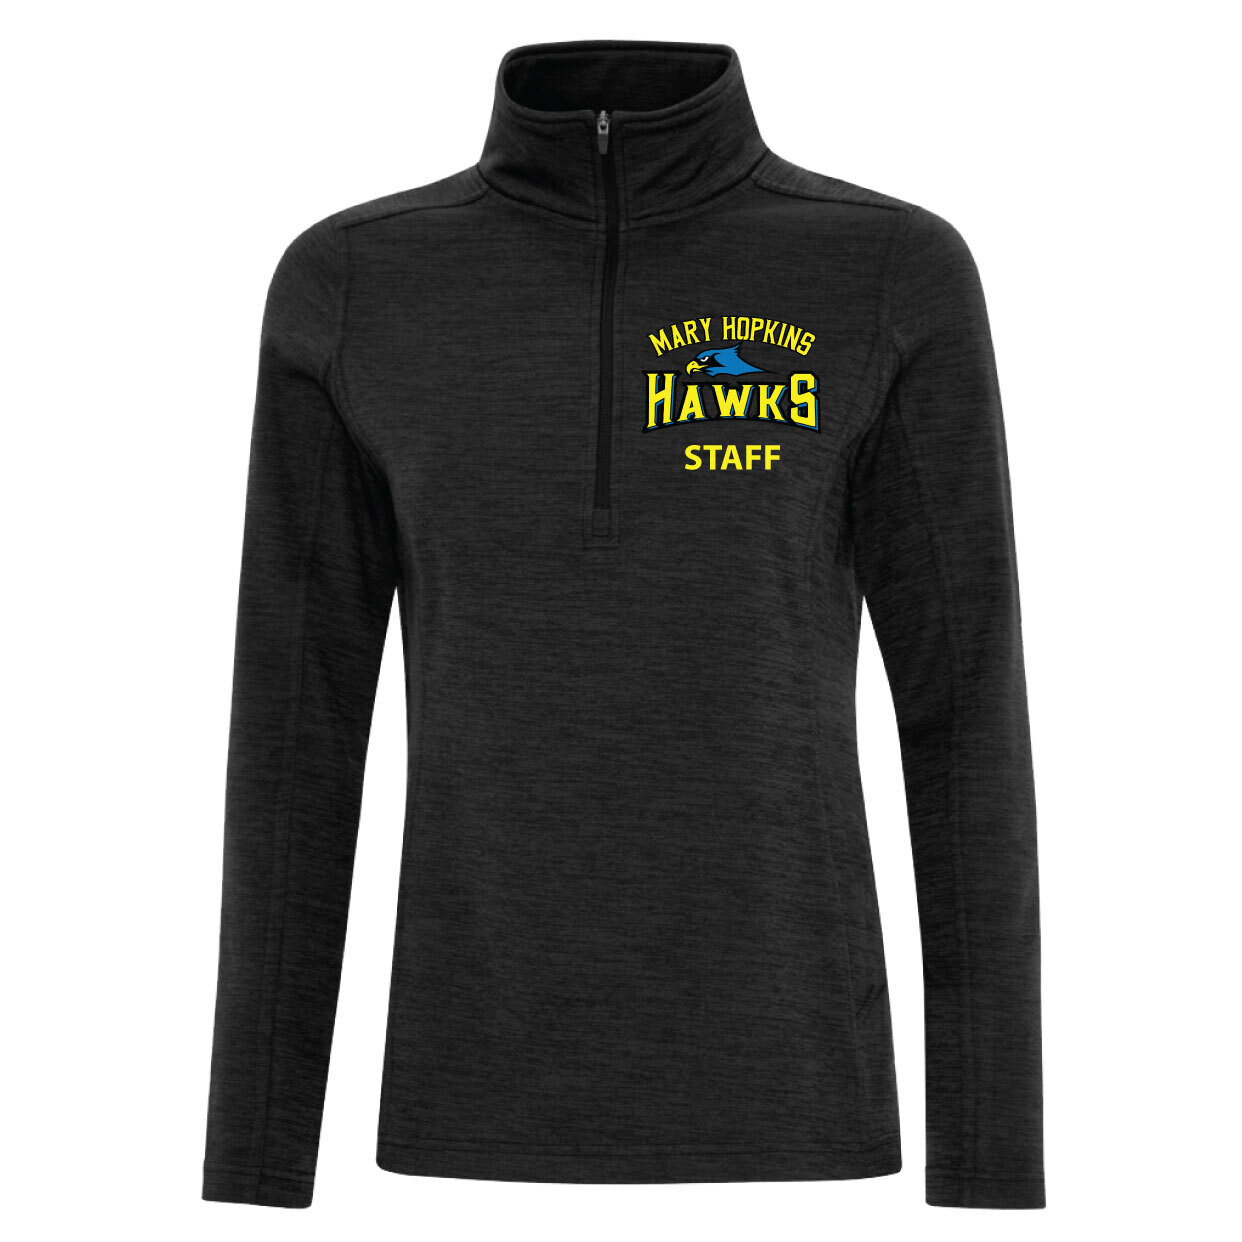 Hawks Staff - Ladies 1/2 Zip Sweatshirt